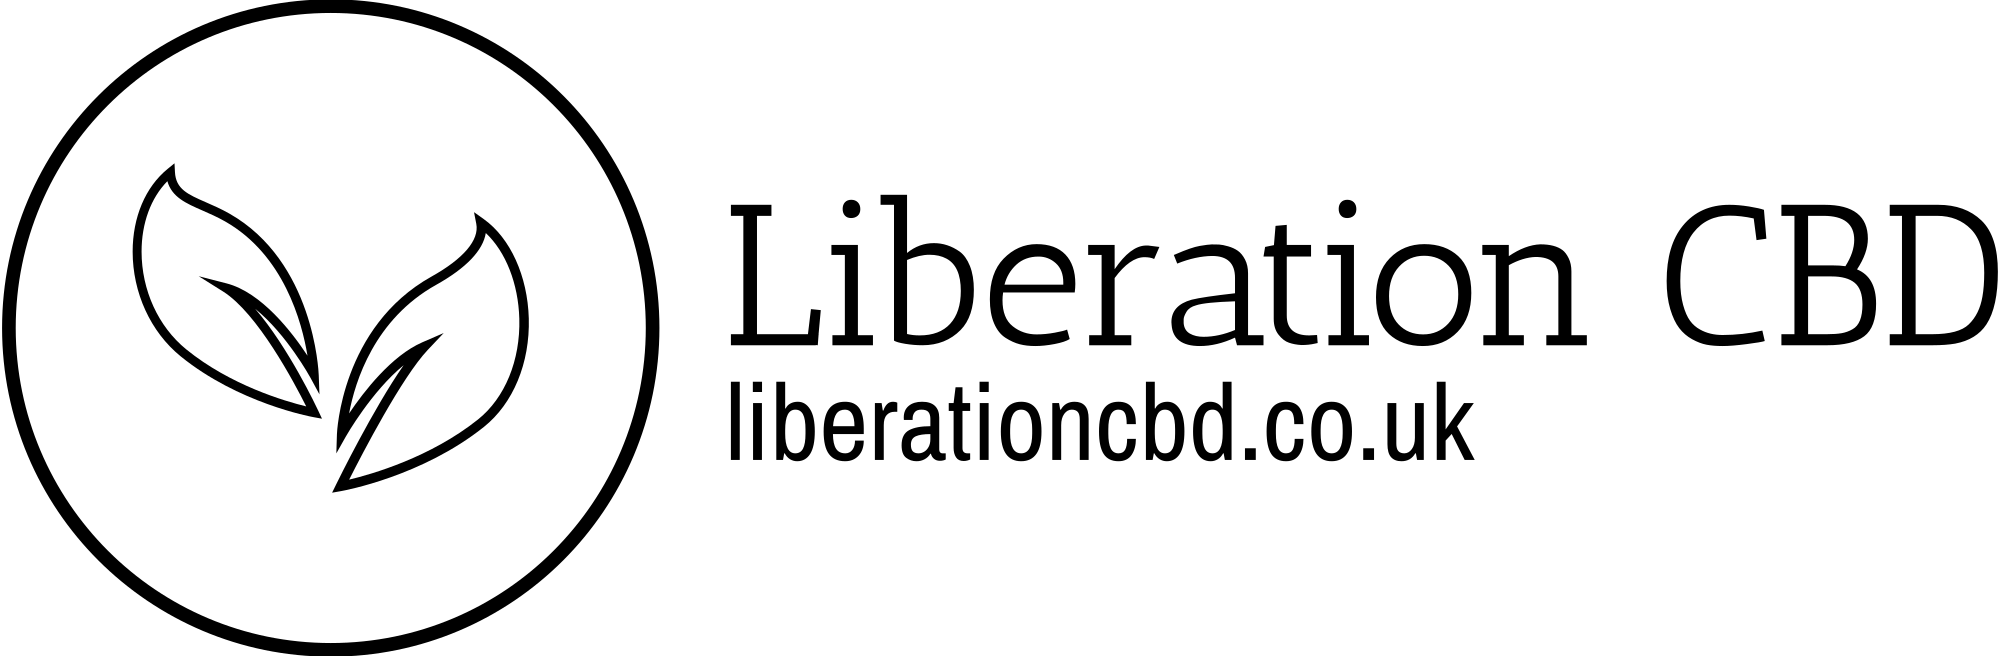 liberation-cbd_LOGO